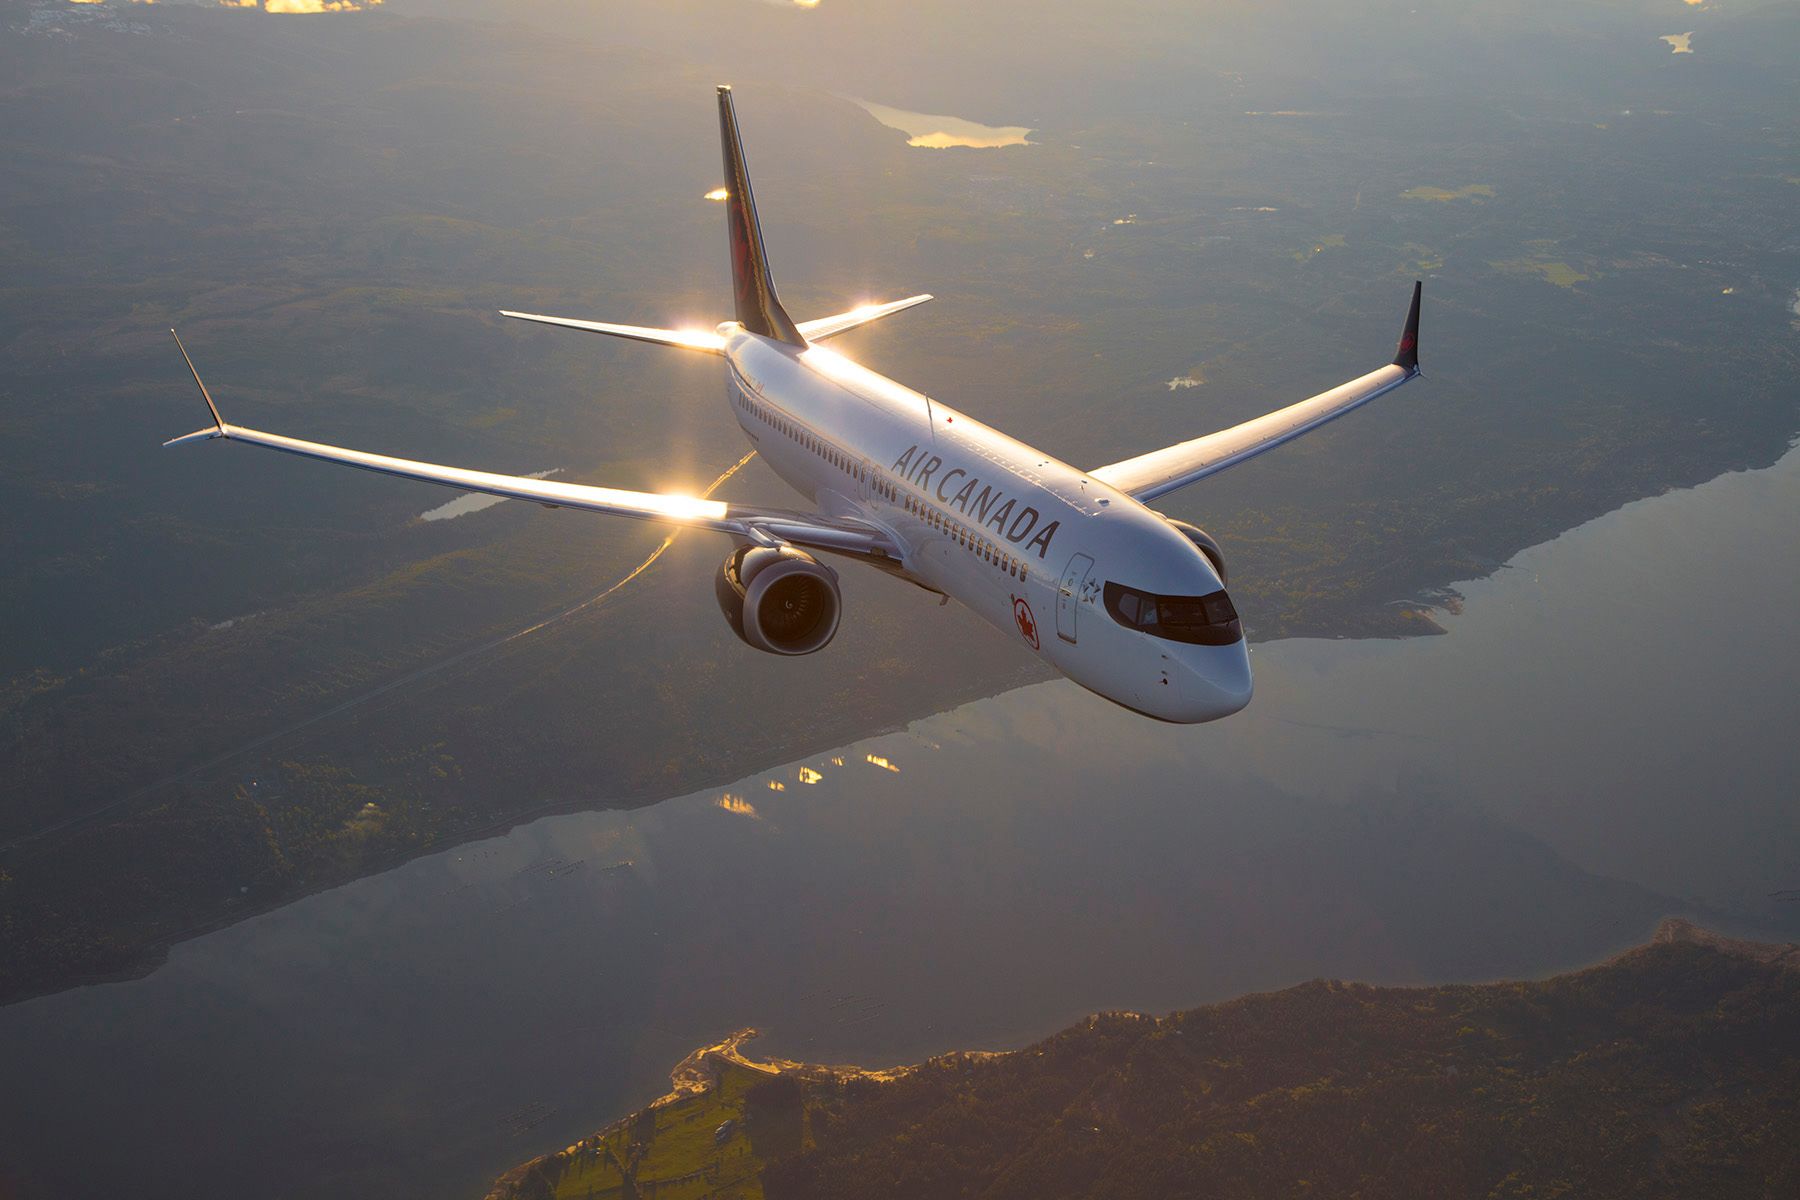 Boeing 737 Max late light shine